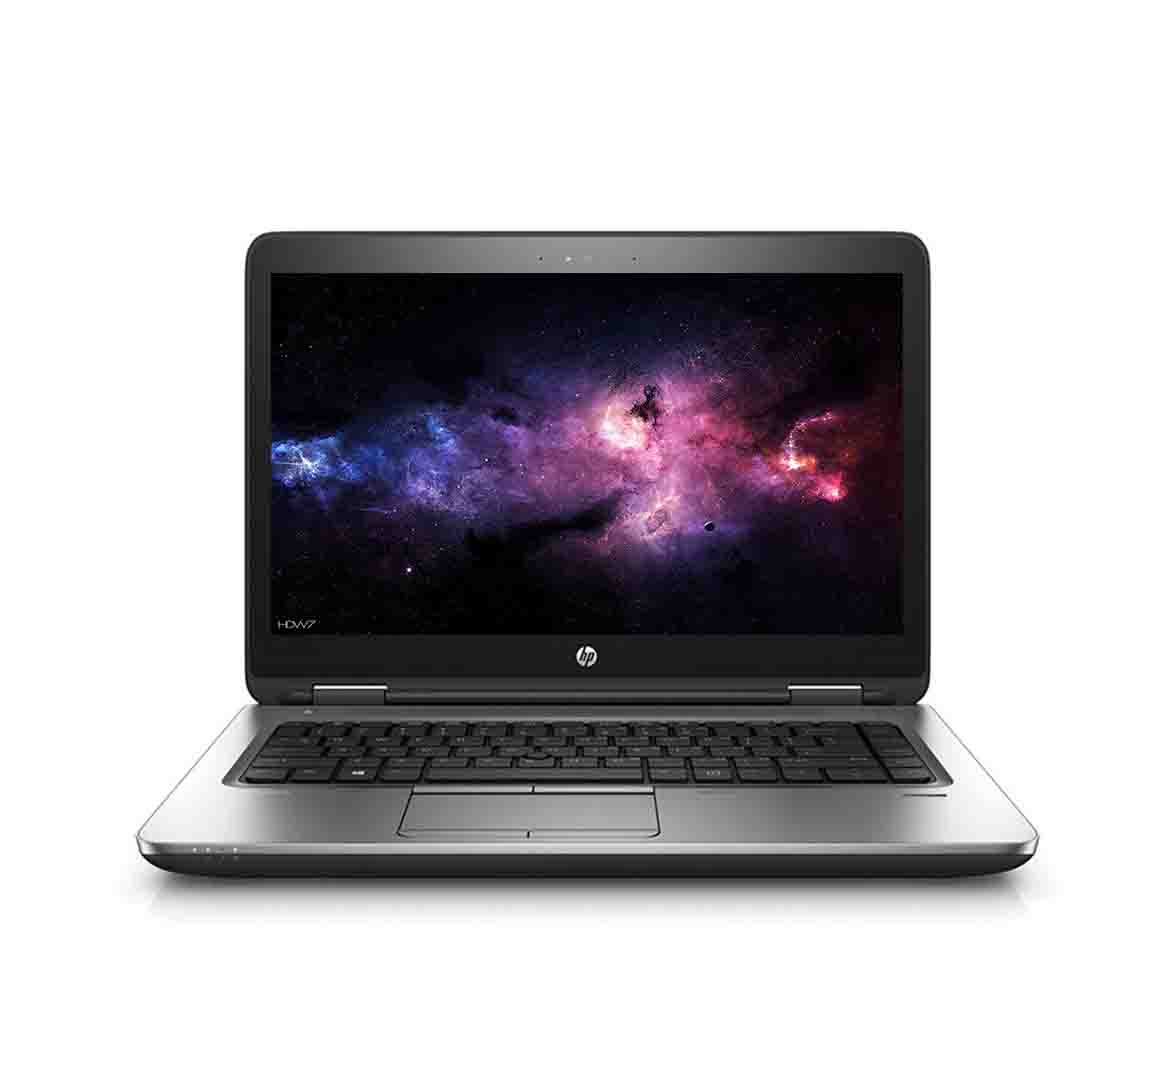 HP ProBook 640 G2 Business Laptop, Intel Core i5-6th Generation CPU, 8GB RAM, 256GB SSD, 14.1 inch Display, Windows 10 Pro